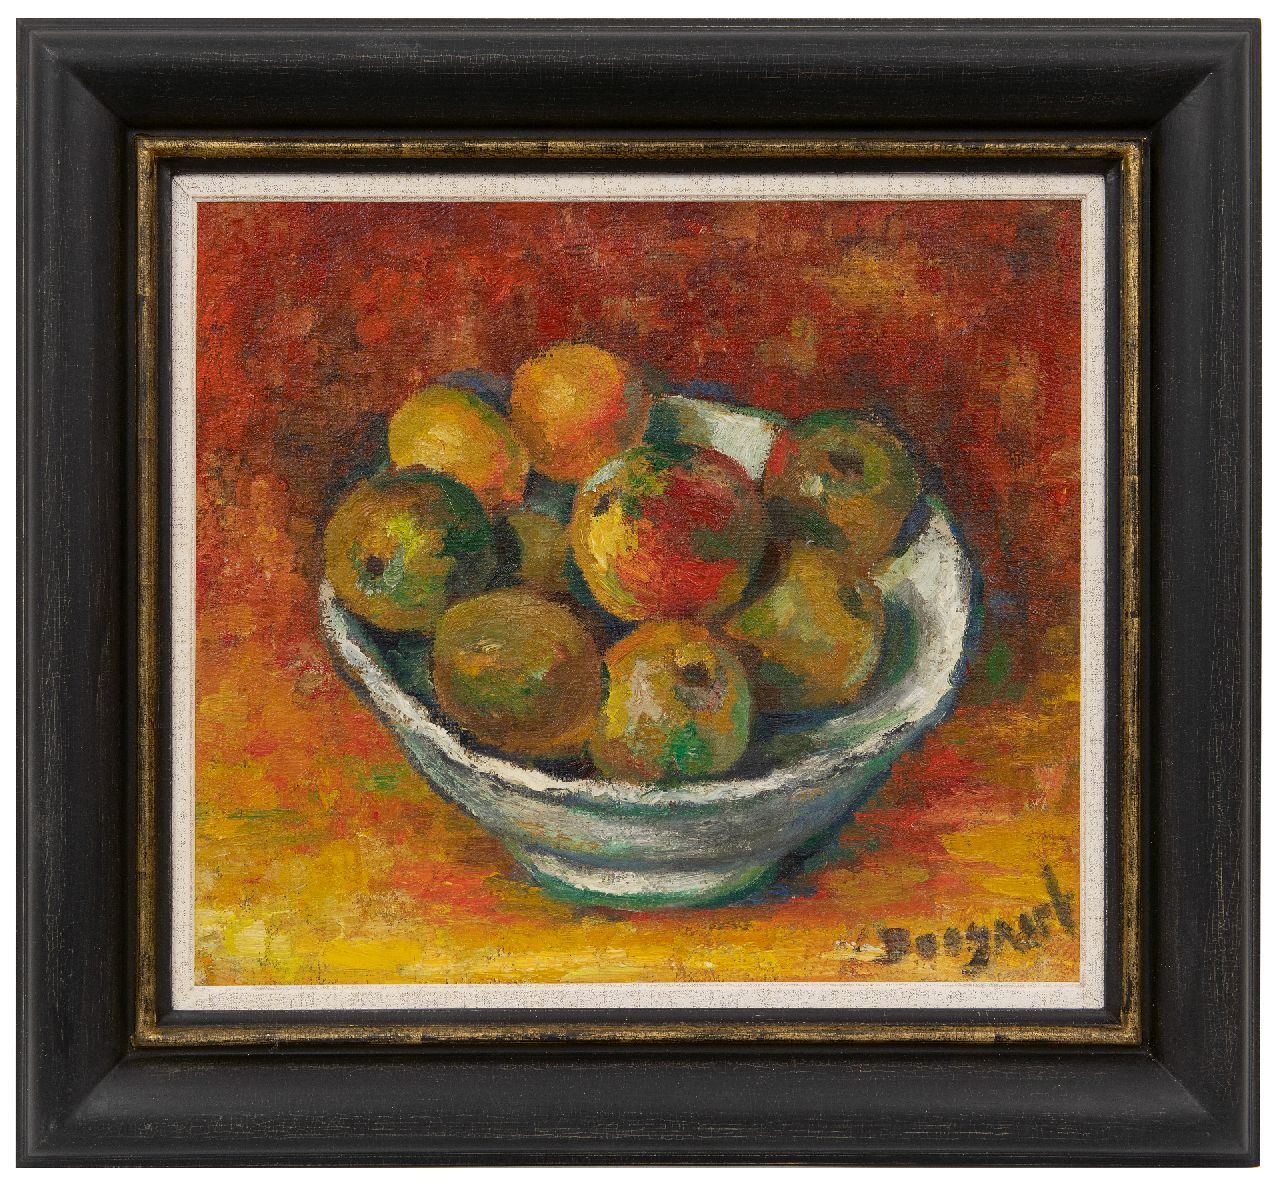 Bogart (Abraham van den Boogaart)   | Bram Bogart (Abraham van den Boogaart) | Paintings offered for sale | A still life with apples, oil on canvas 40.3 x 45.1 cm, signed l.r.